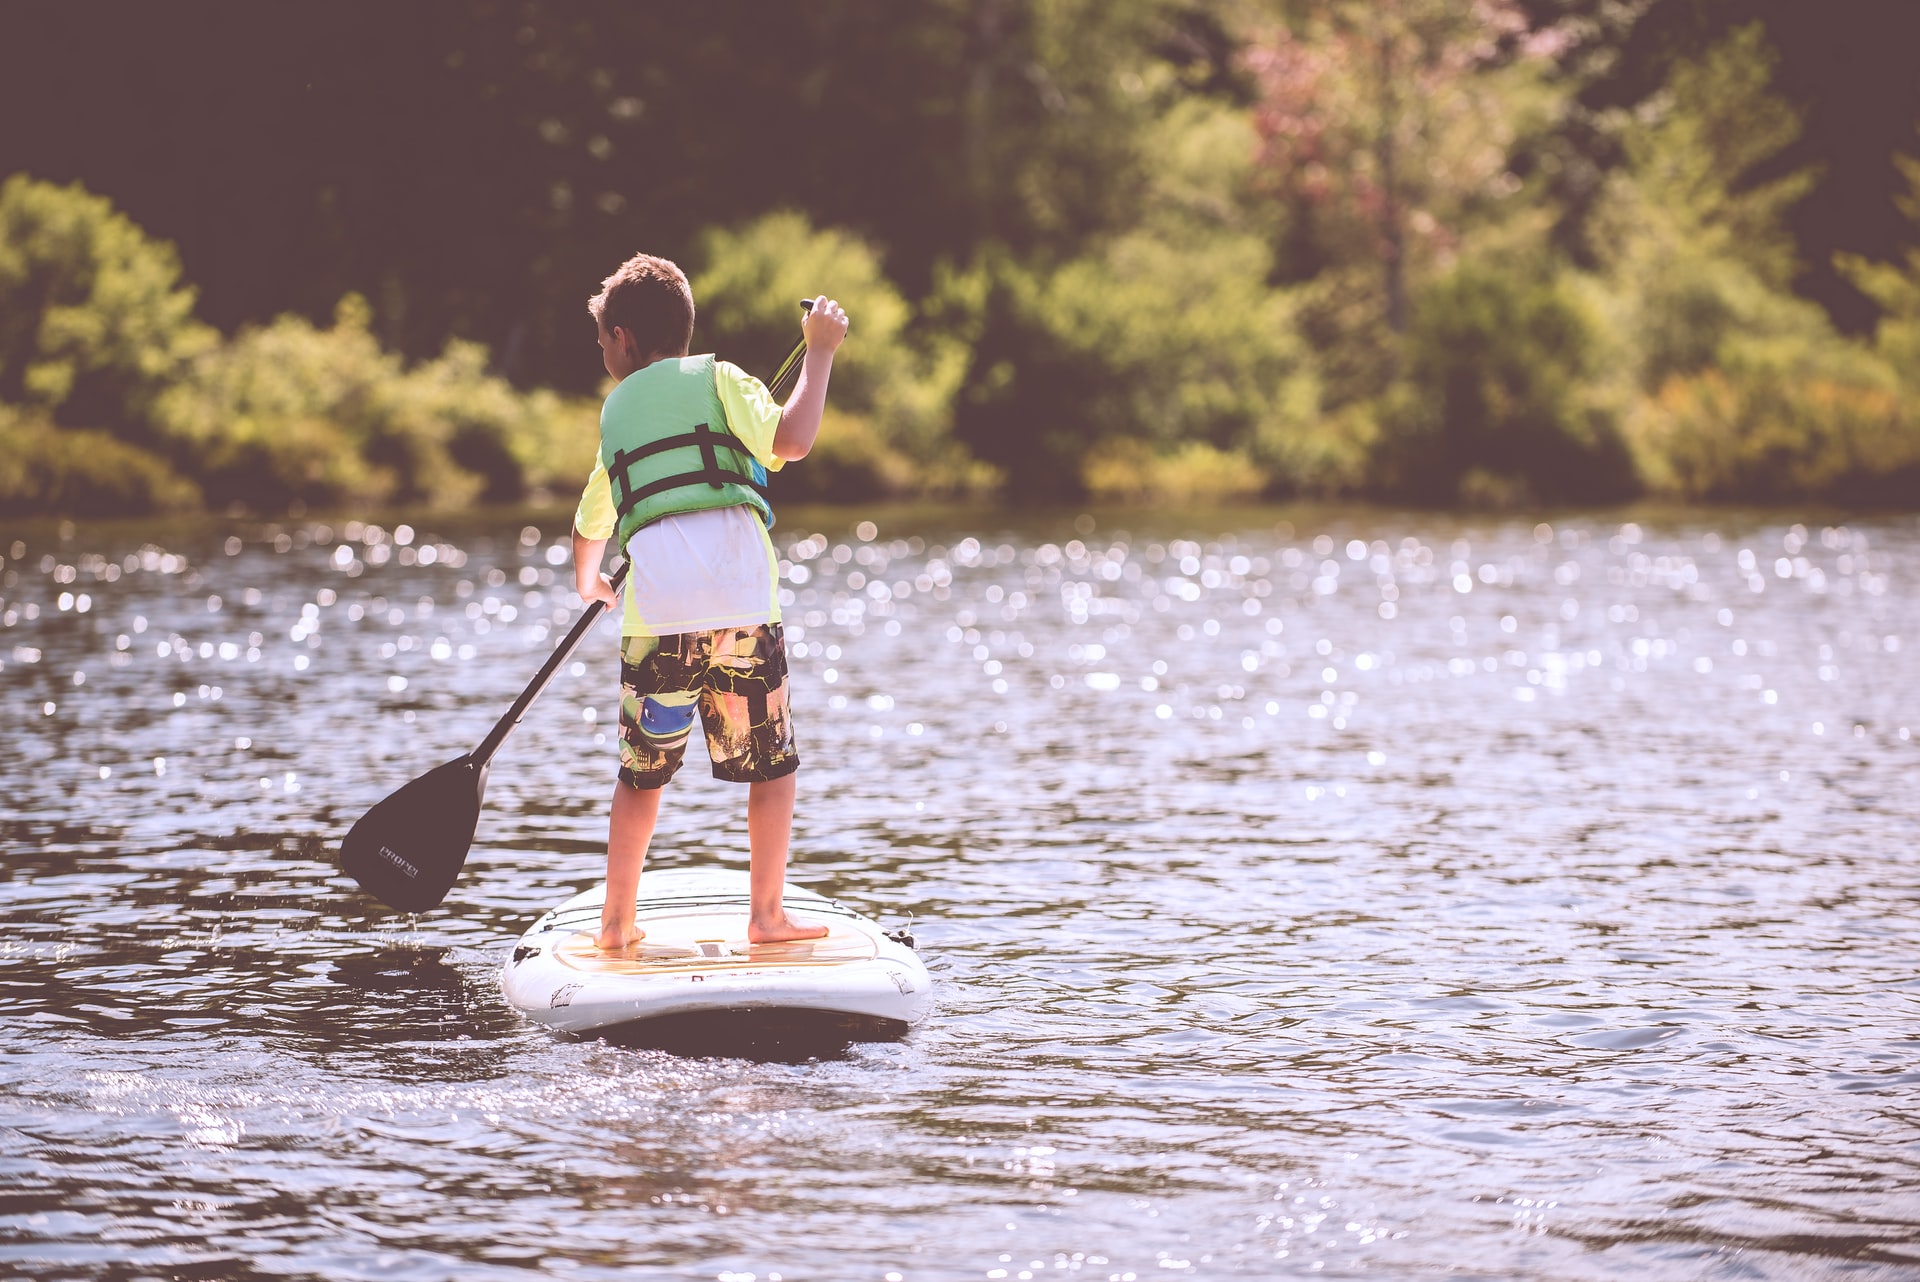 A boy on a paddle board